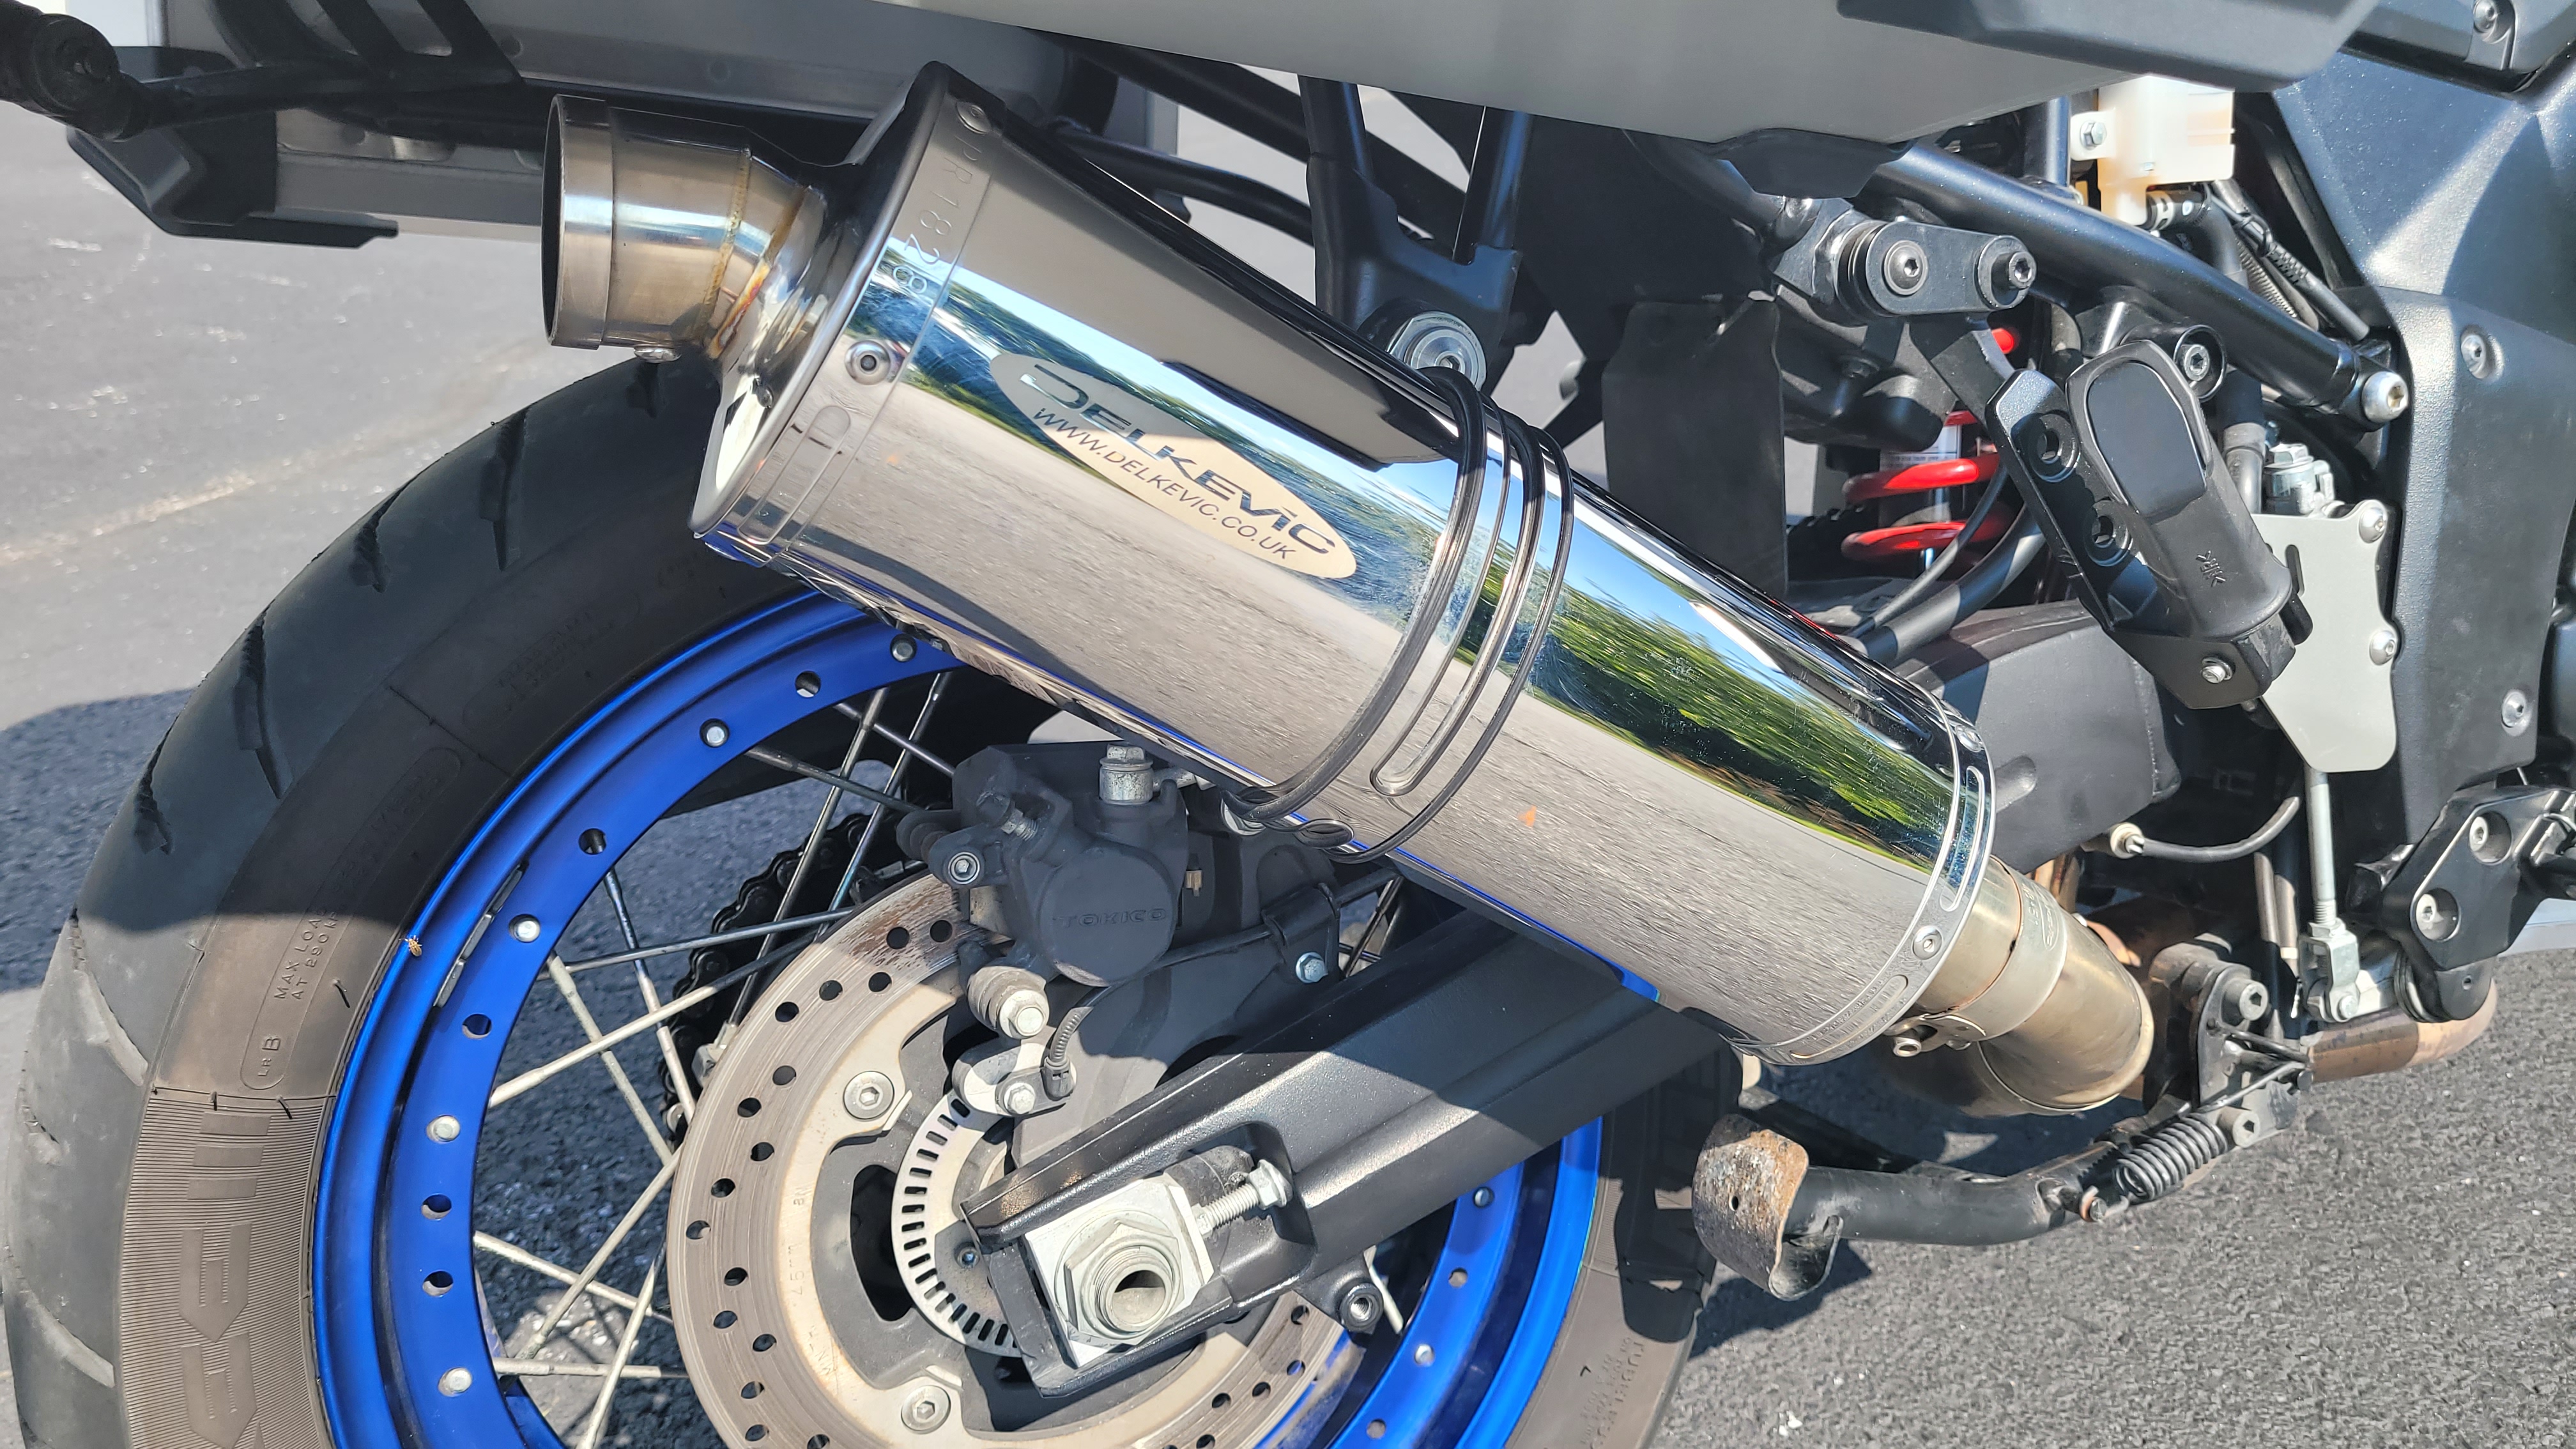 2019 Suzuki V-Strom 1000XT Adventure at Yamaha Triumph KTM of Camp Hill, Camp Hill, PA 17011